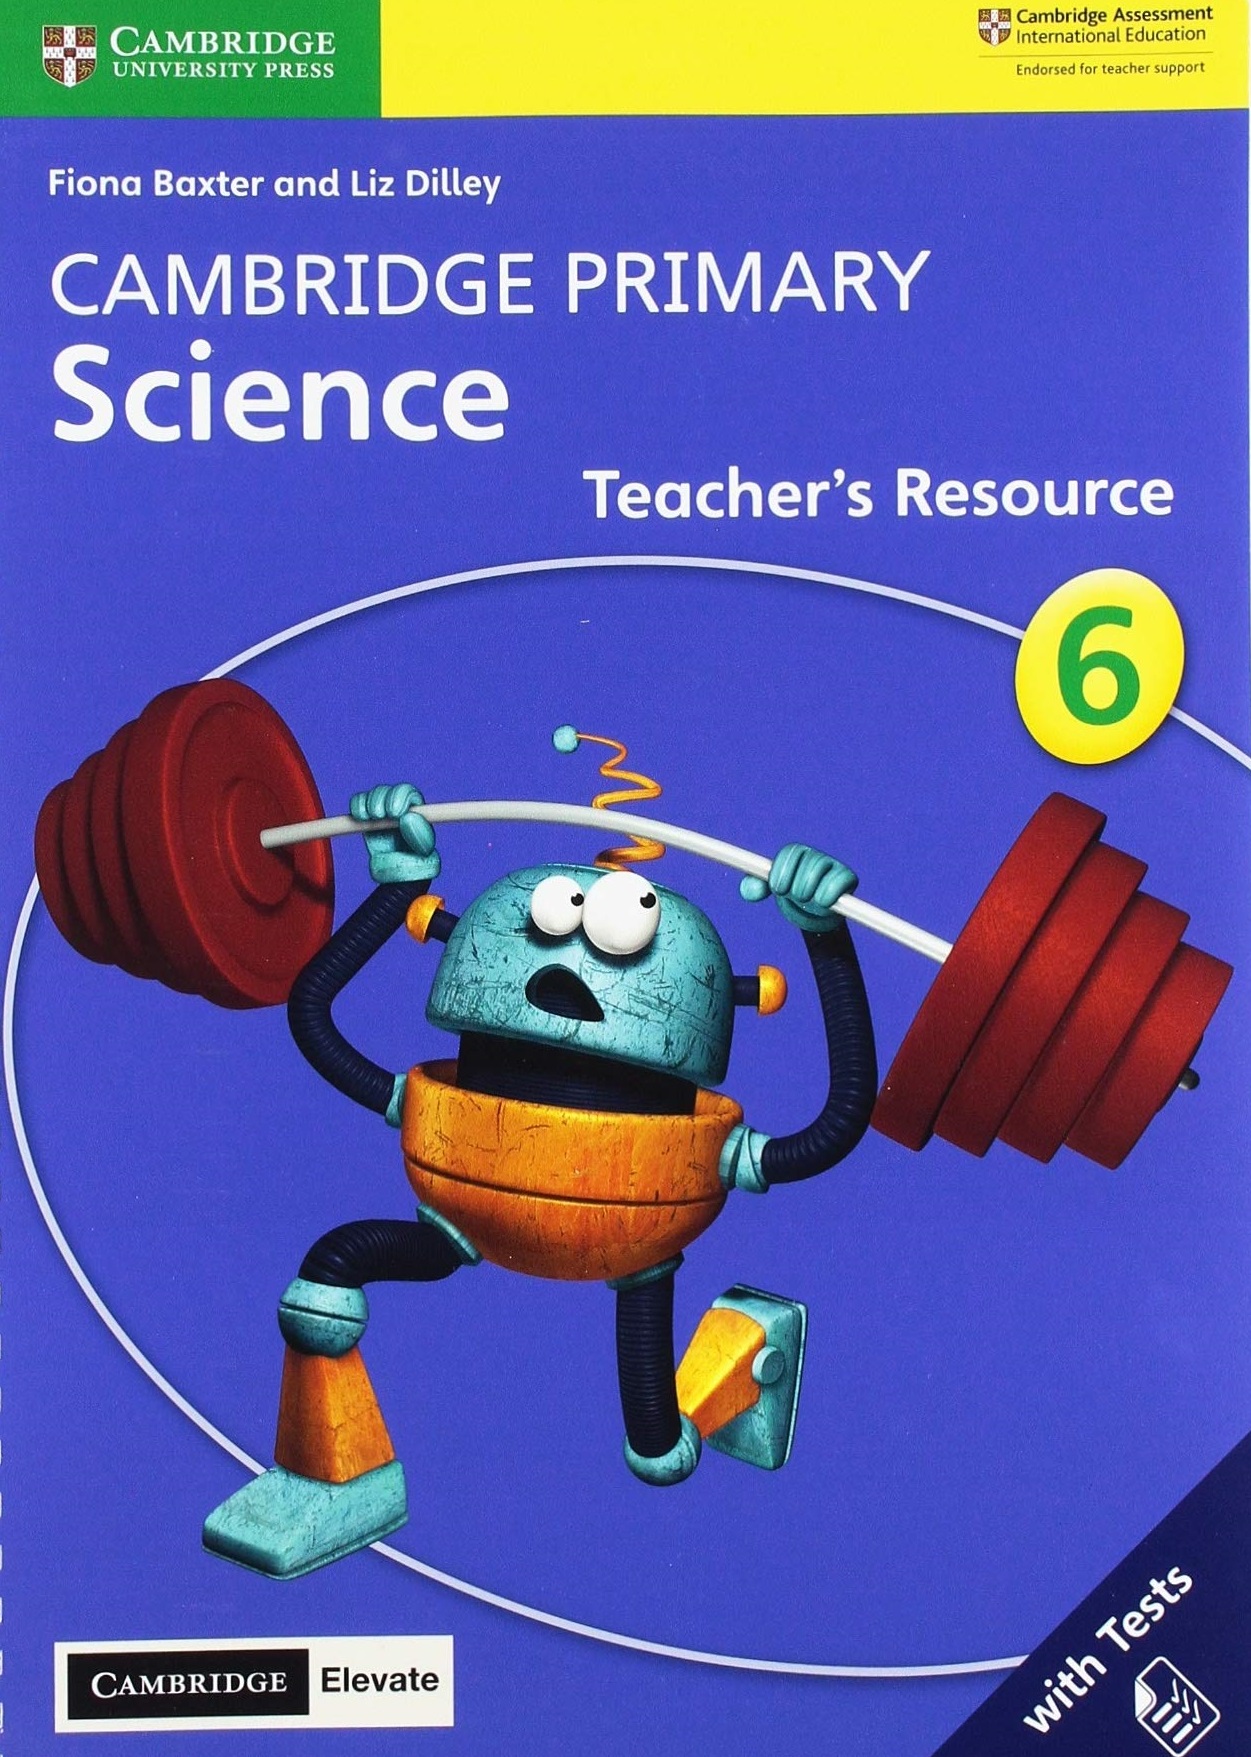 Cambridge Primary Science 6 Teacher's Resource / Книга для учителя